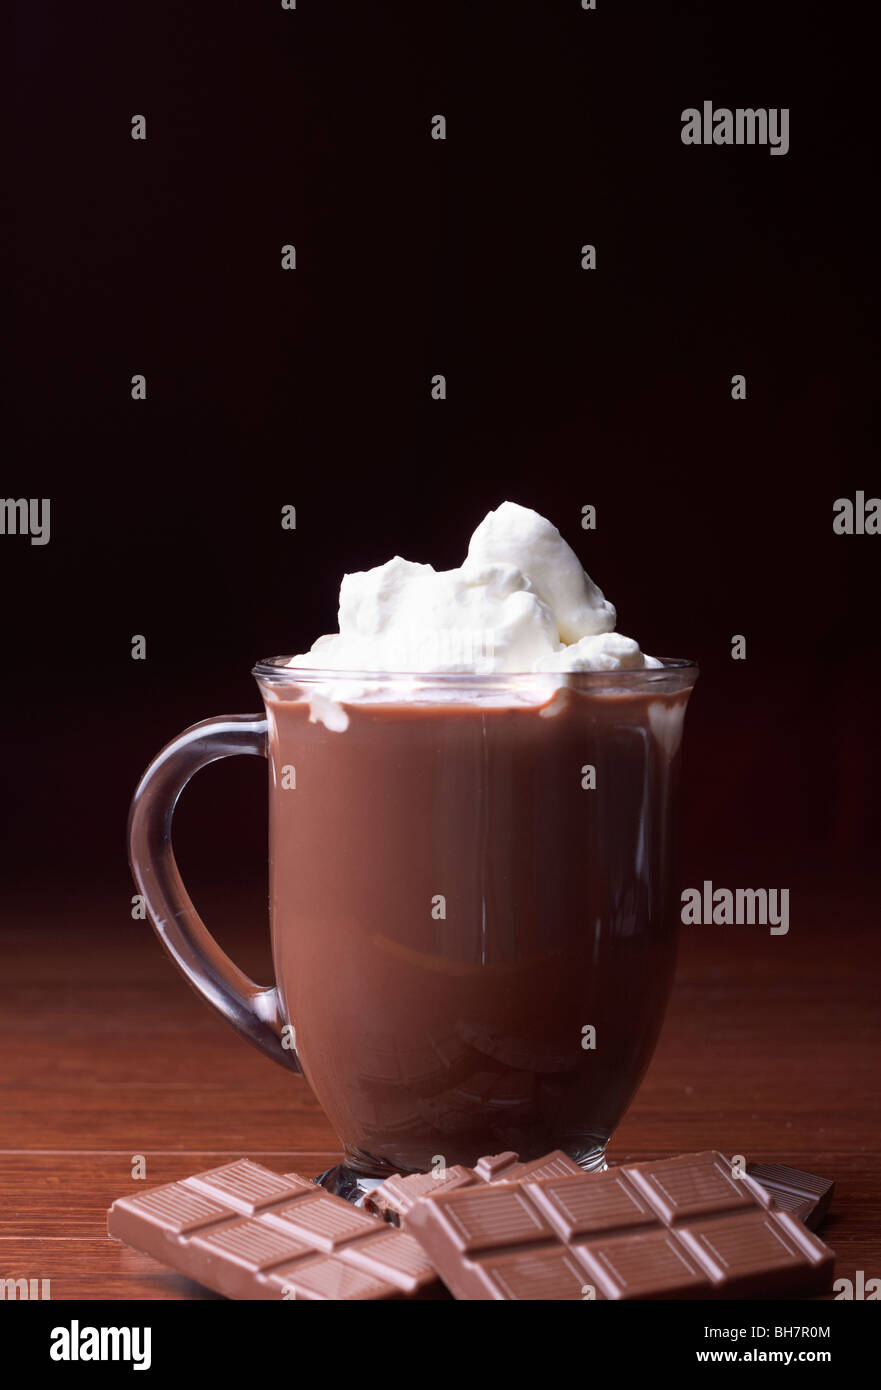 A mug of hot chocolate sits on a table. Stock Photo